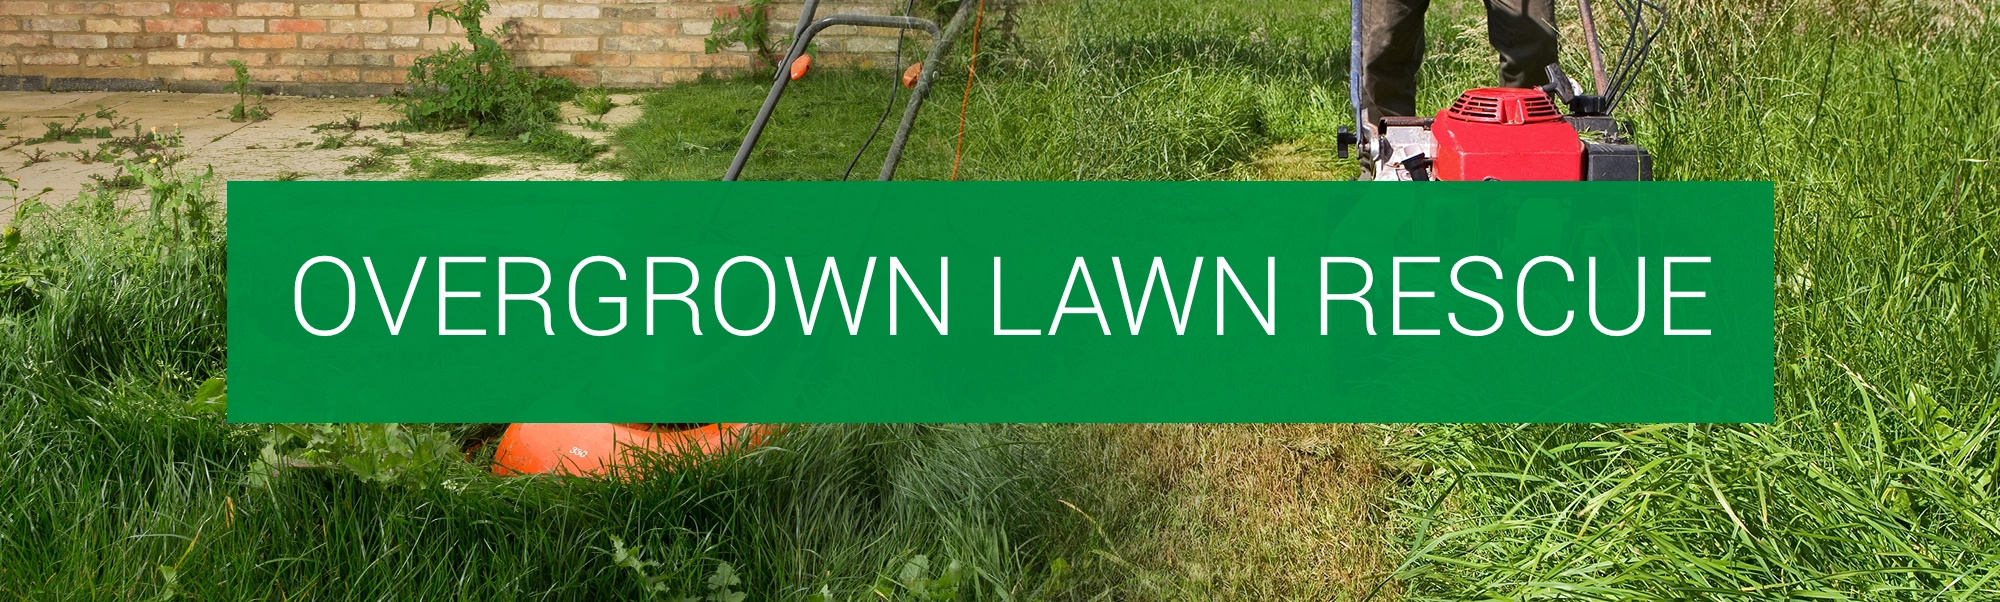 Lawn Care Services in Colorado - Overgrown Lawn Rescue